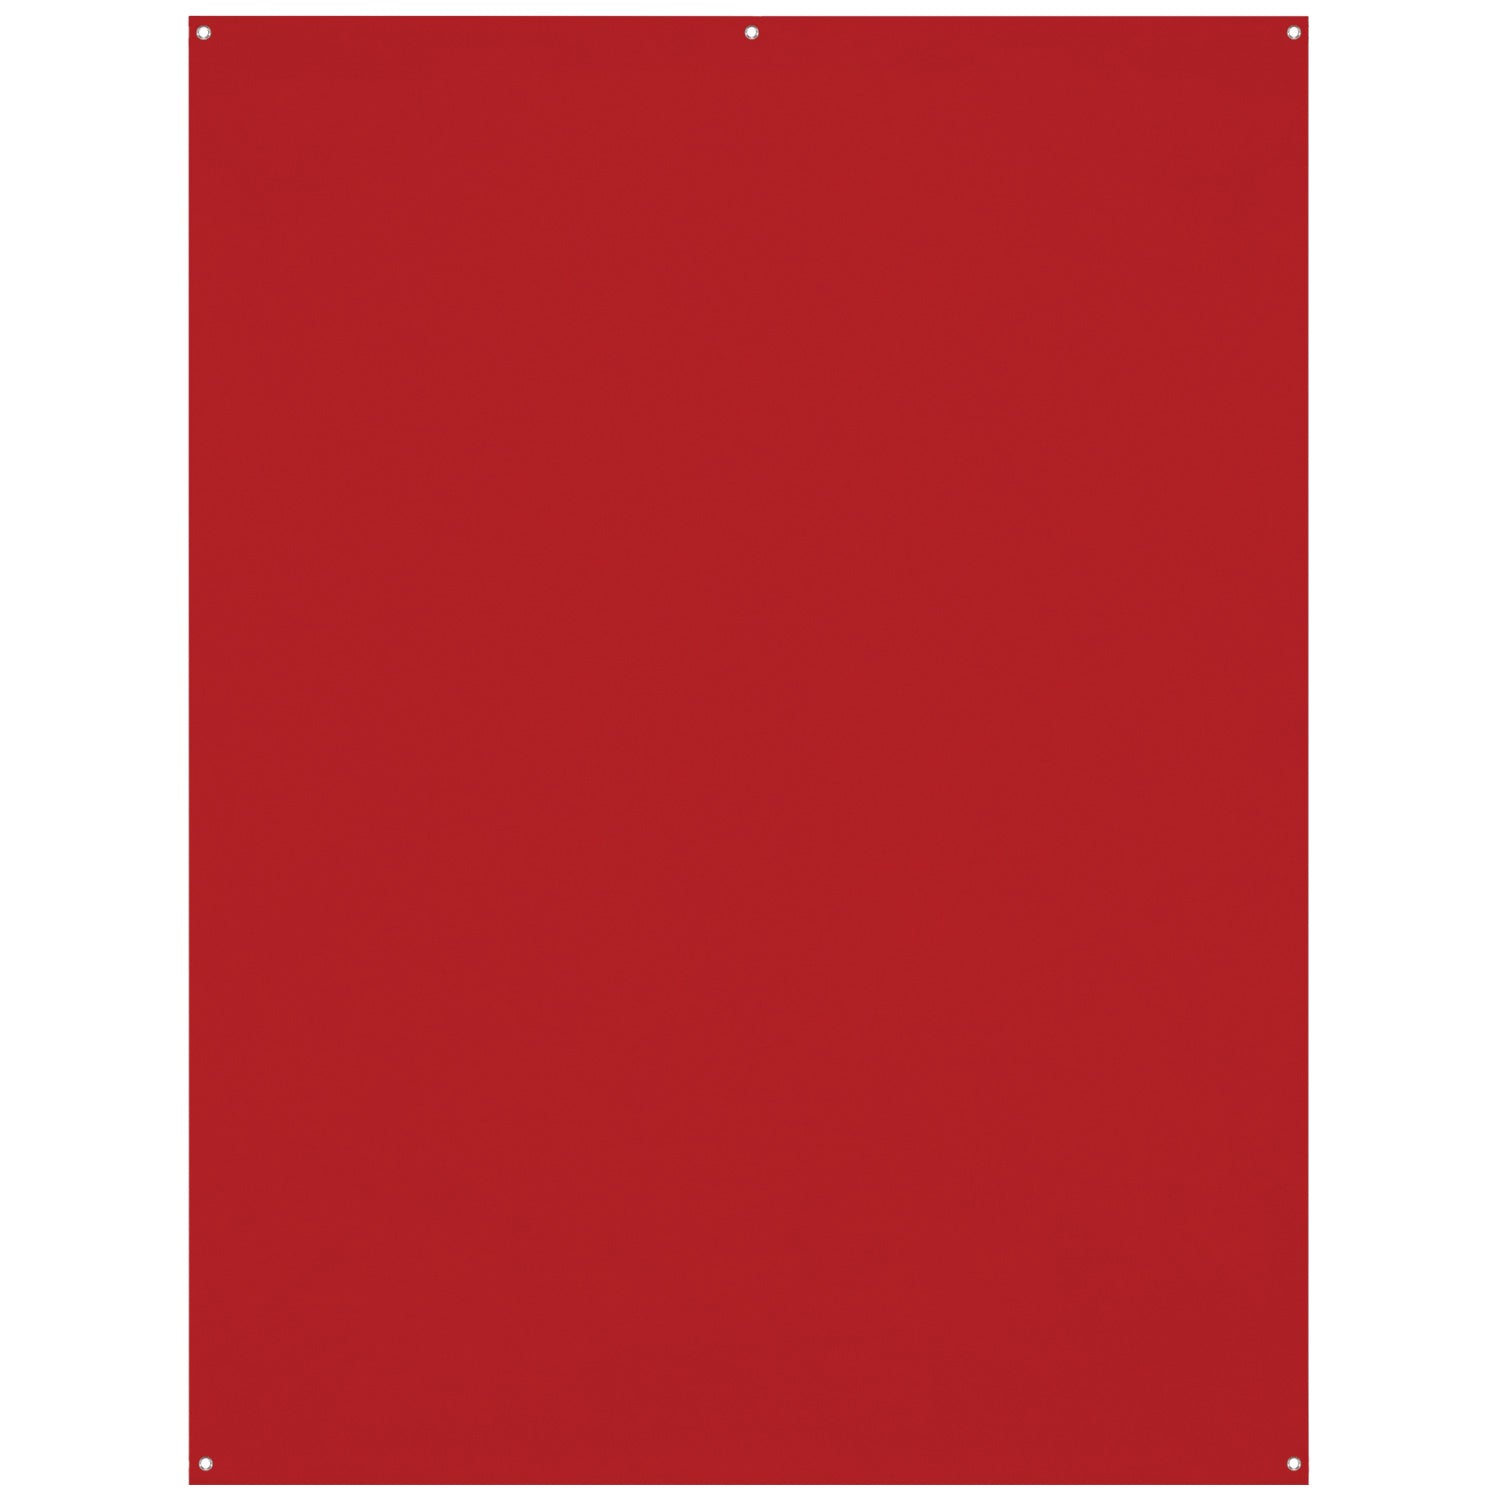 X-Drop Wrinkle-Resistant Backdrop - Scarlet Red (5' x 7')